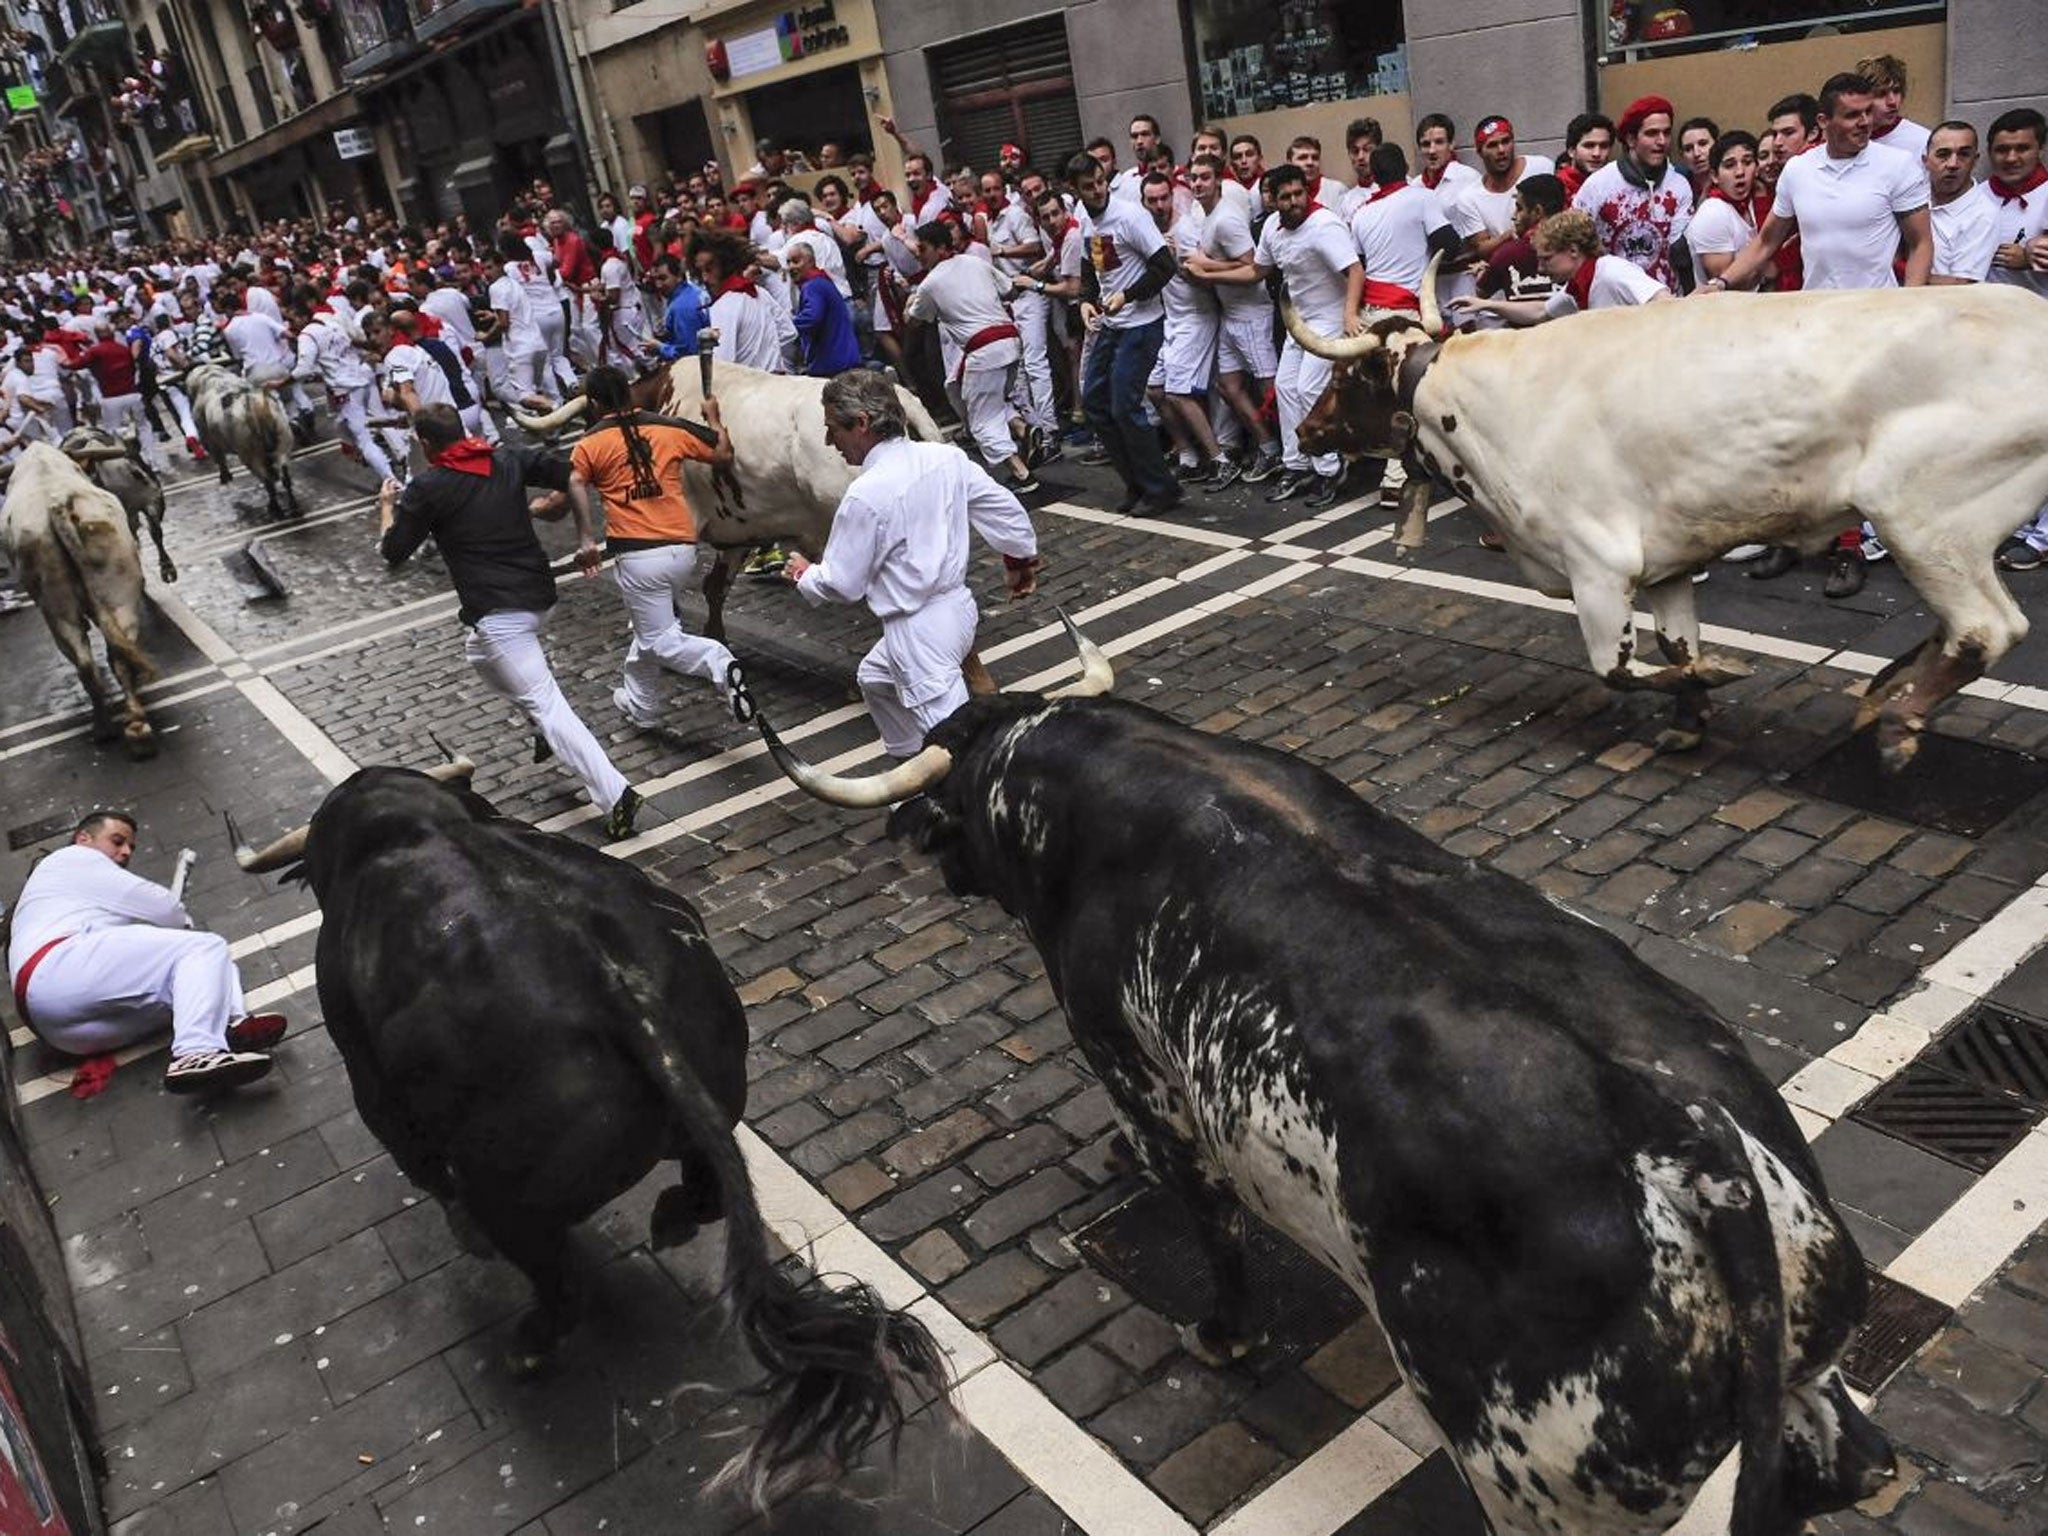 Revelers run ahead of fighting bulls on Estafeta corner during the running of the bulls at the San Fermin festival, in Pamplona, Spain